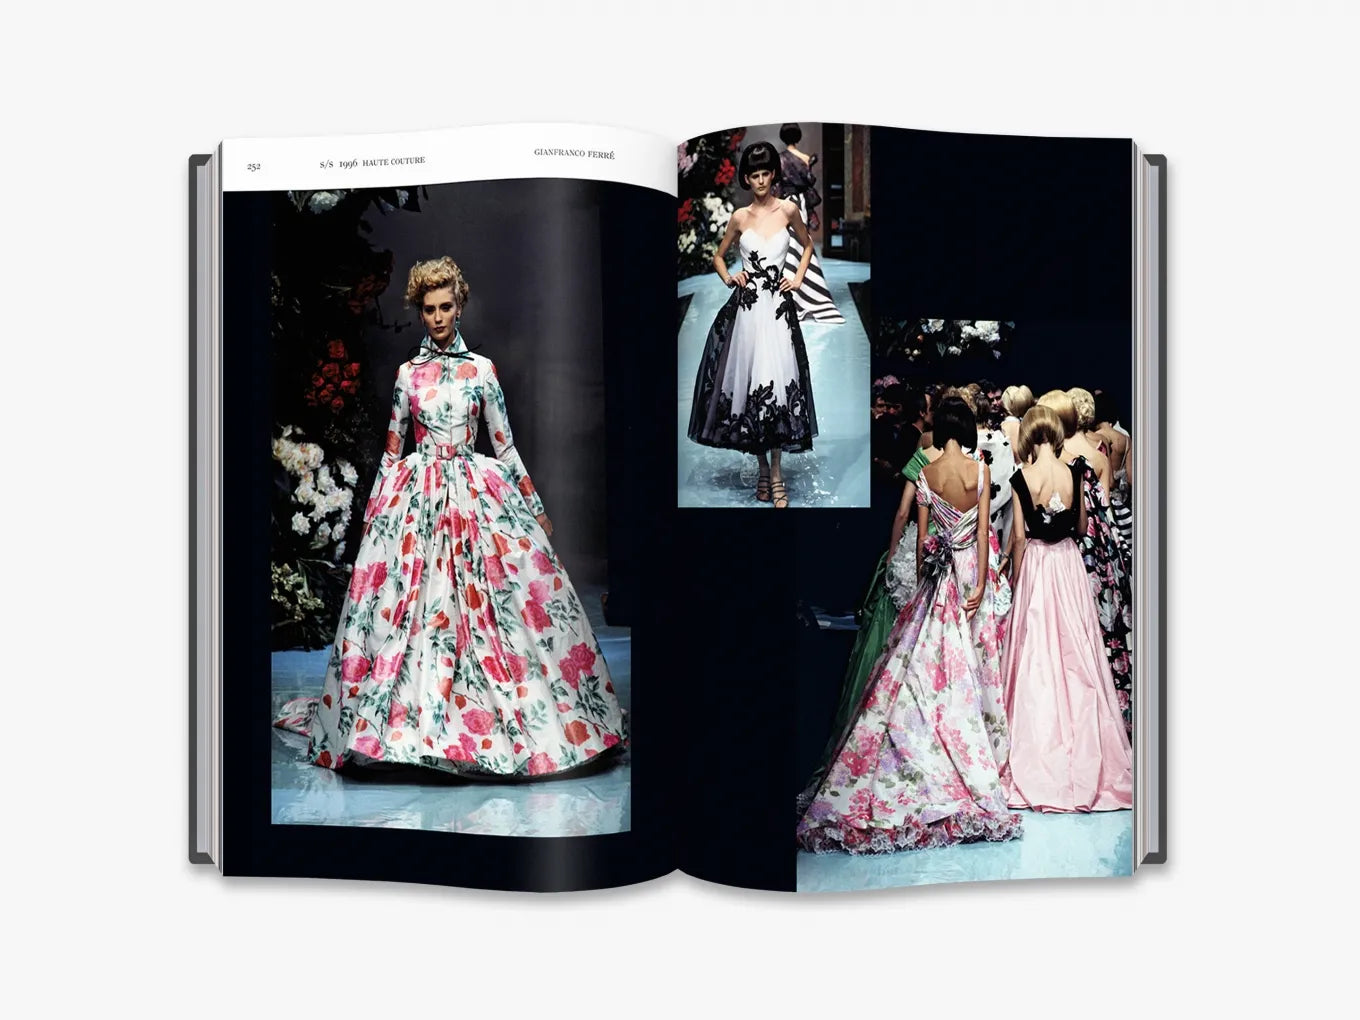 Book: Dior Catwalk English Version